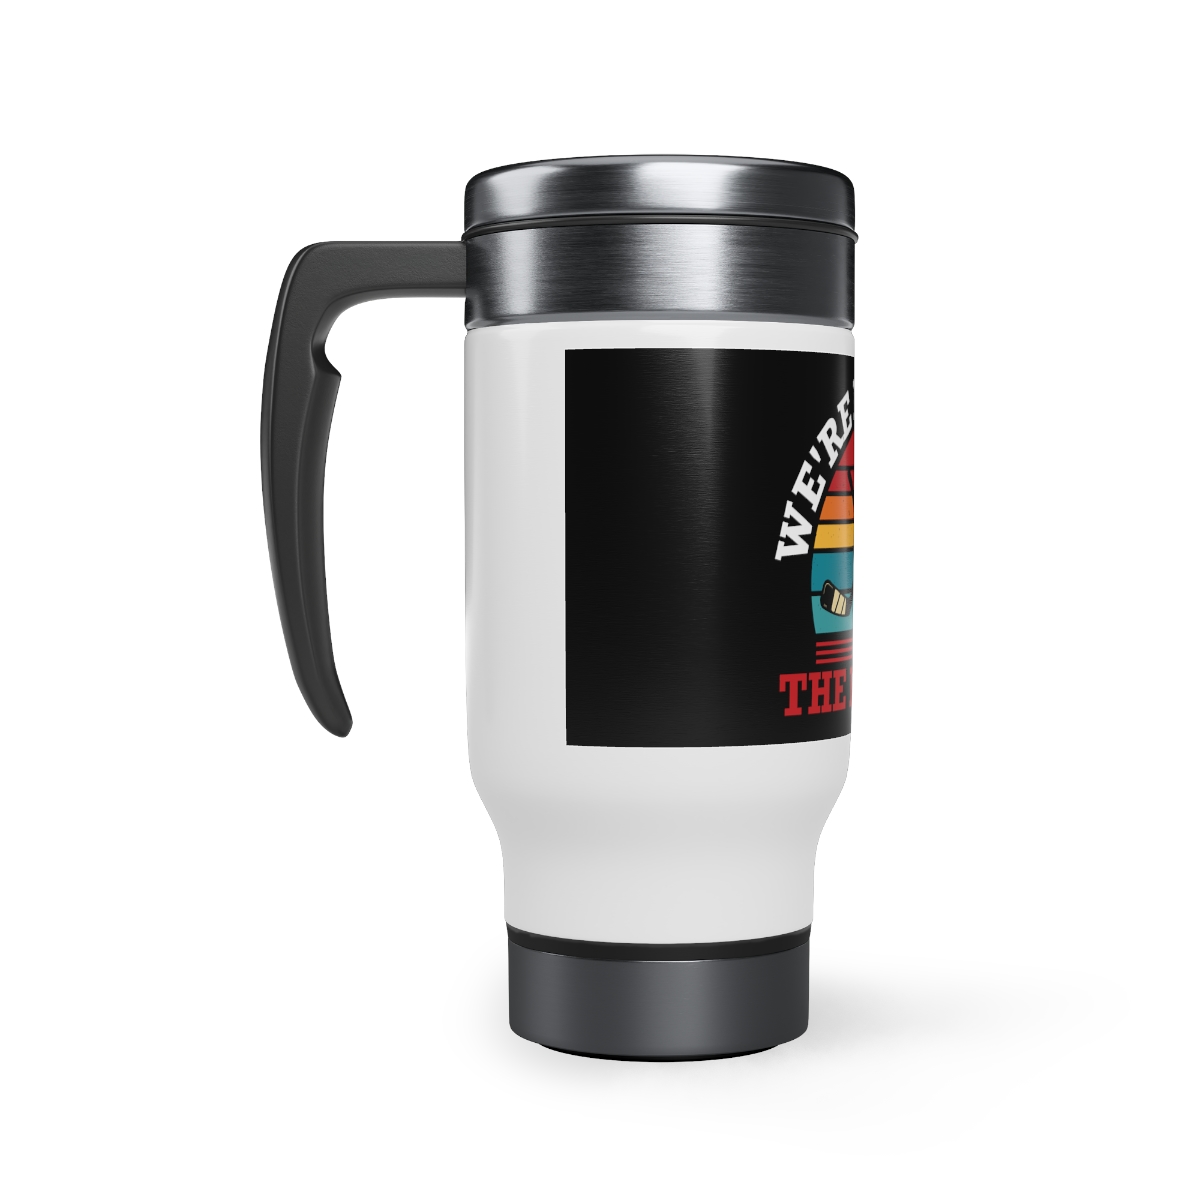 Stainless Steel Travel Mug with Handle, 14oz product thumbnail image